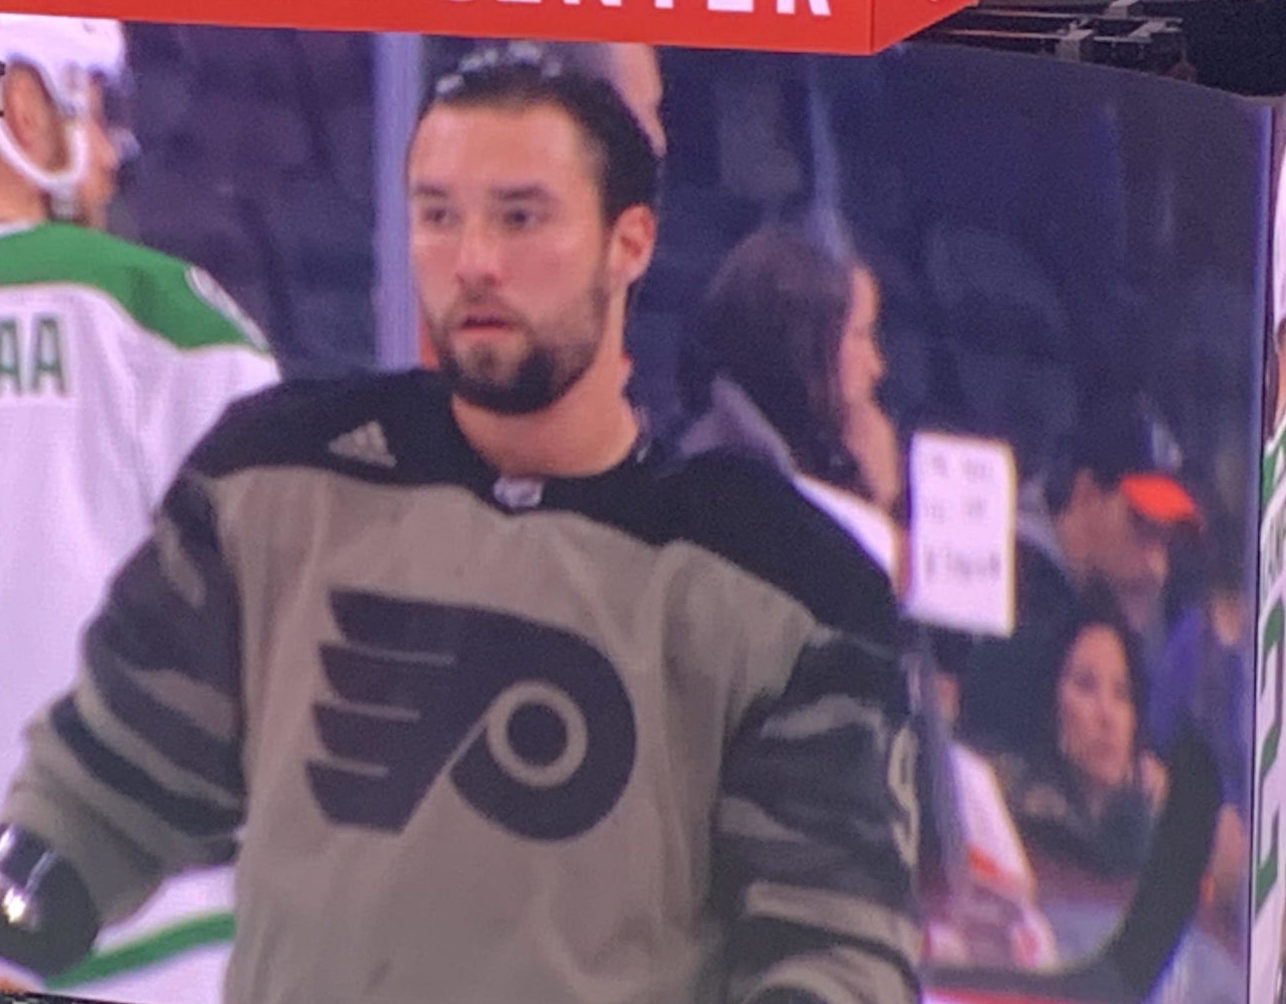 Ivan Provorov, Philadelphia Flyers